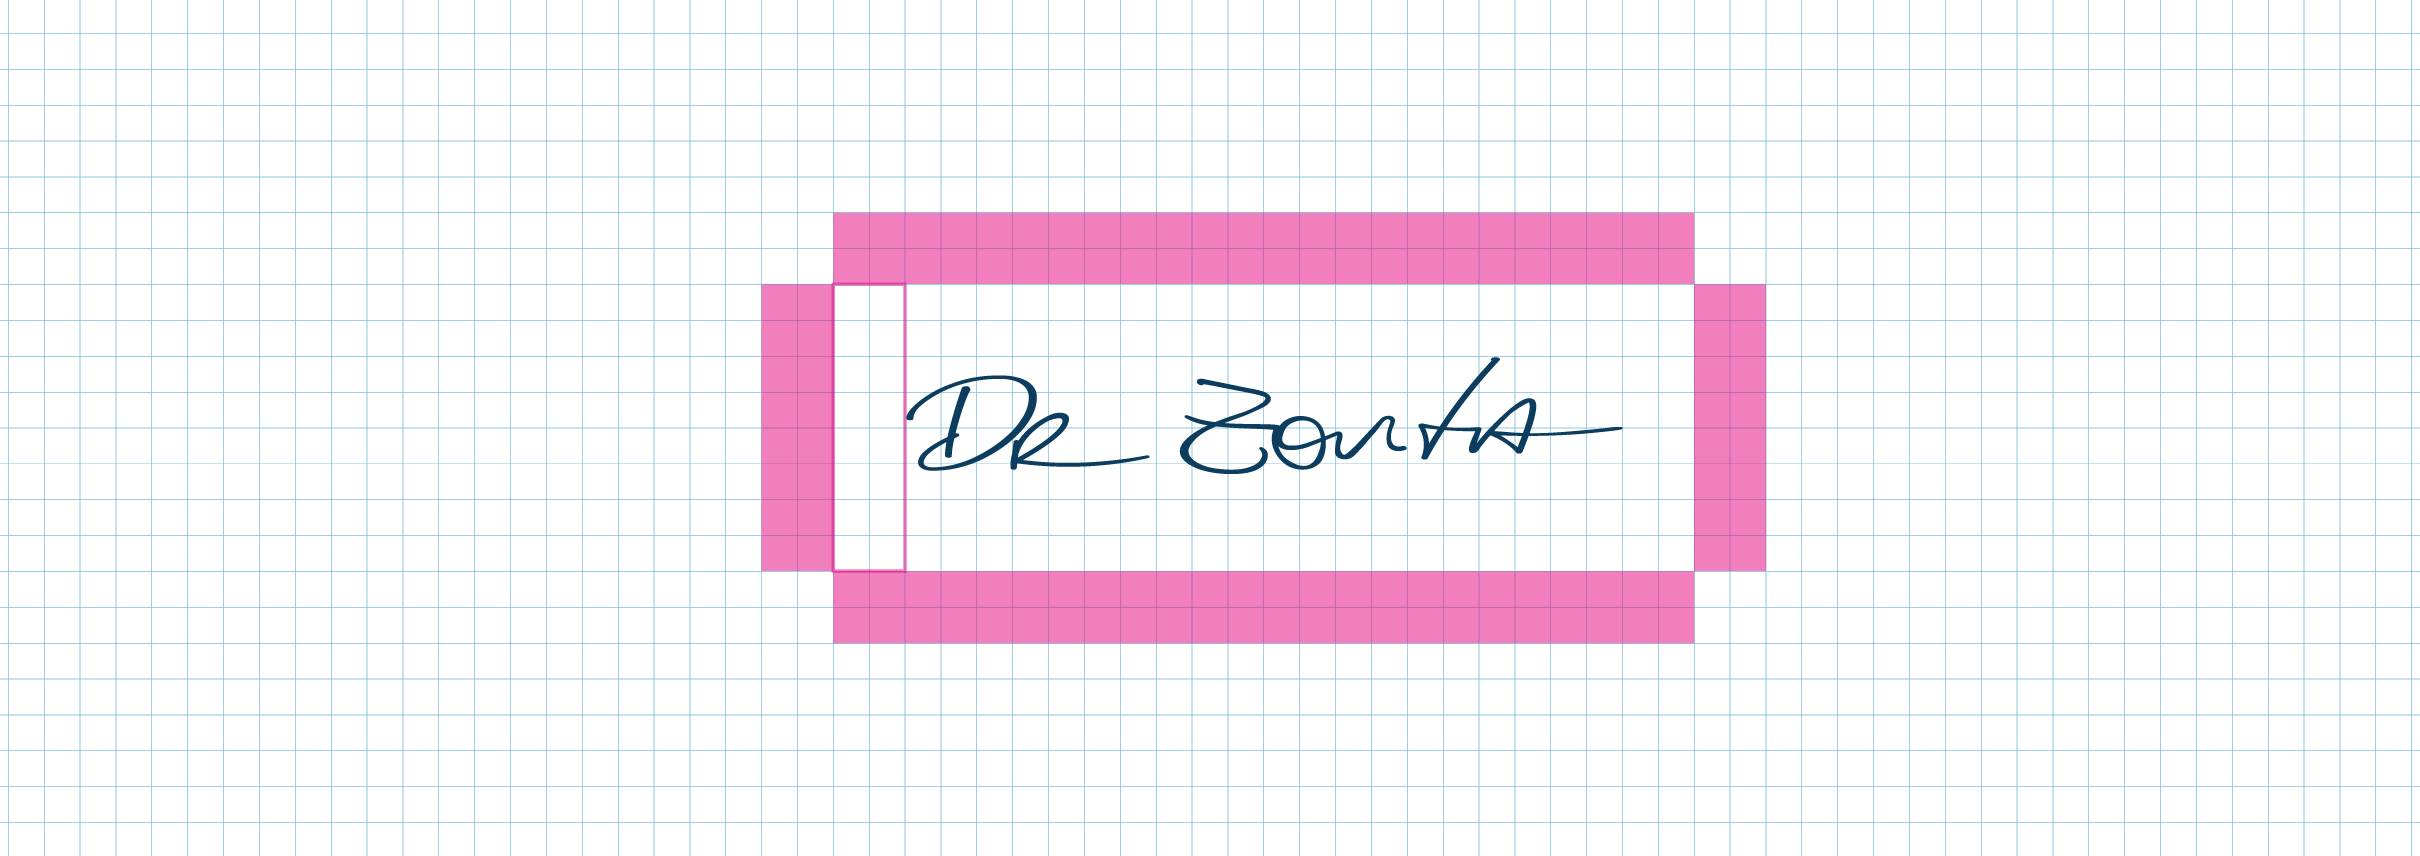 DR ZONTA - BUFFO DESIGN - IDENTIDADE VISUAL